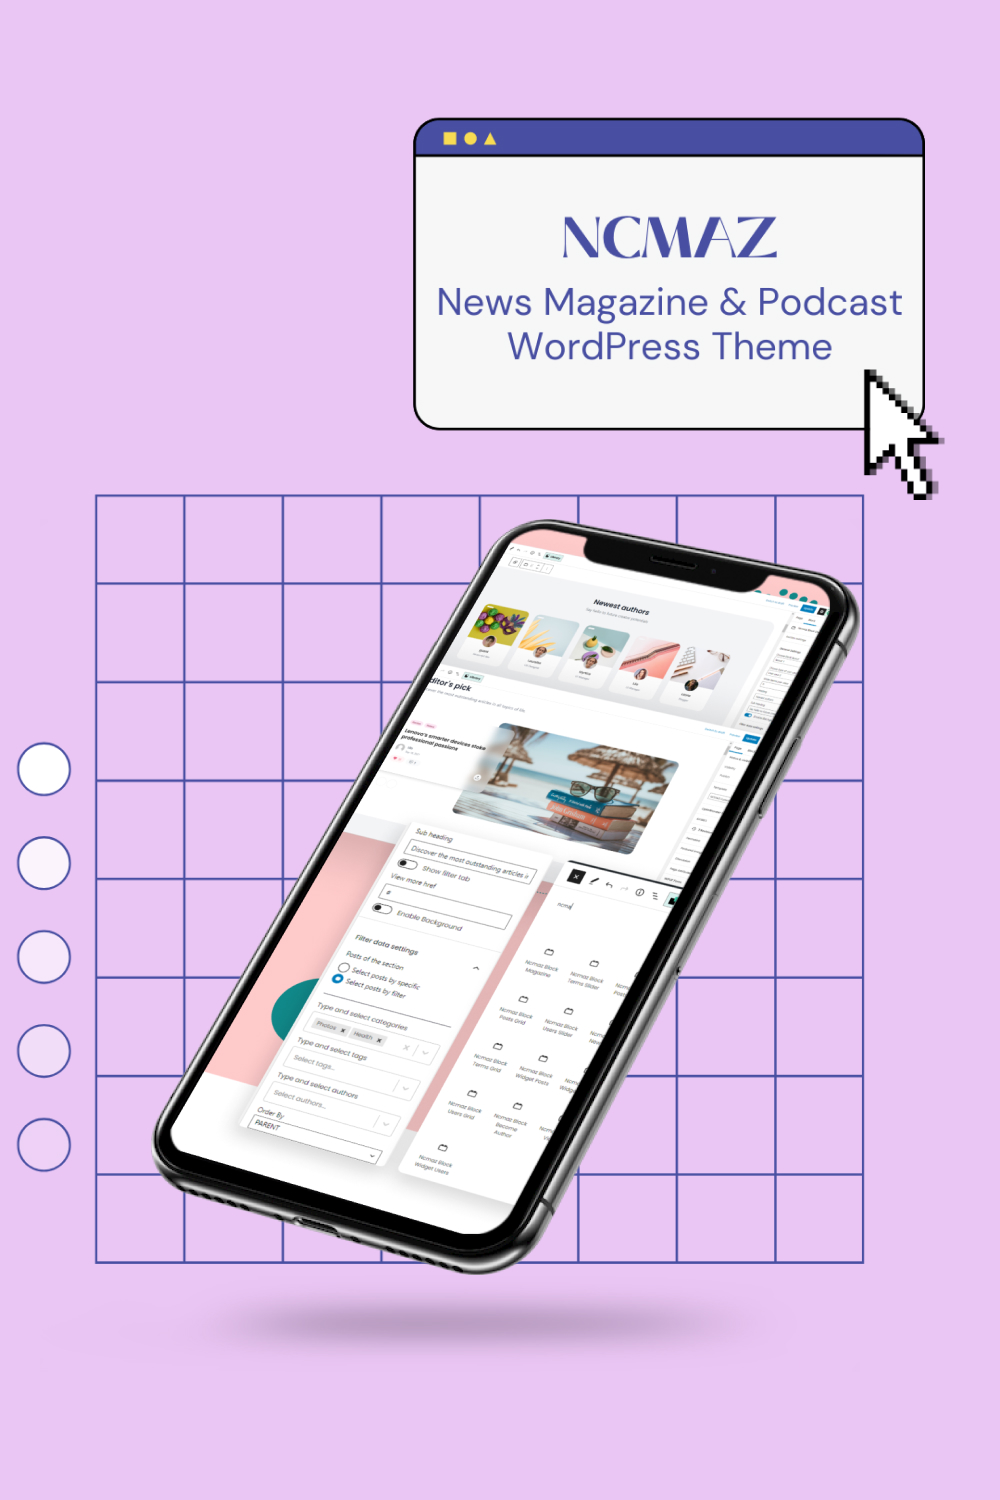 Ncmaz - News Magazine & Podcast WordPress Theme - Pinterest.